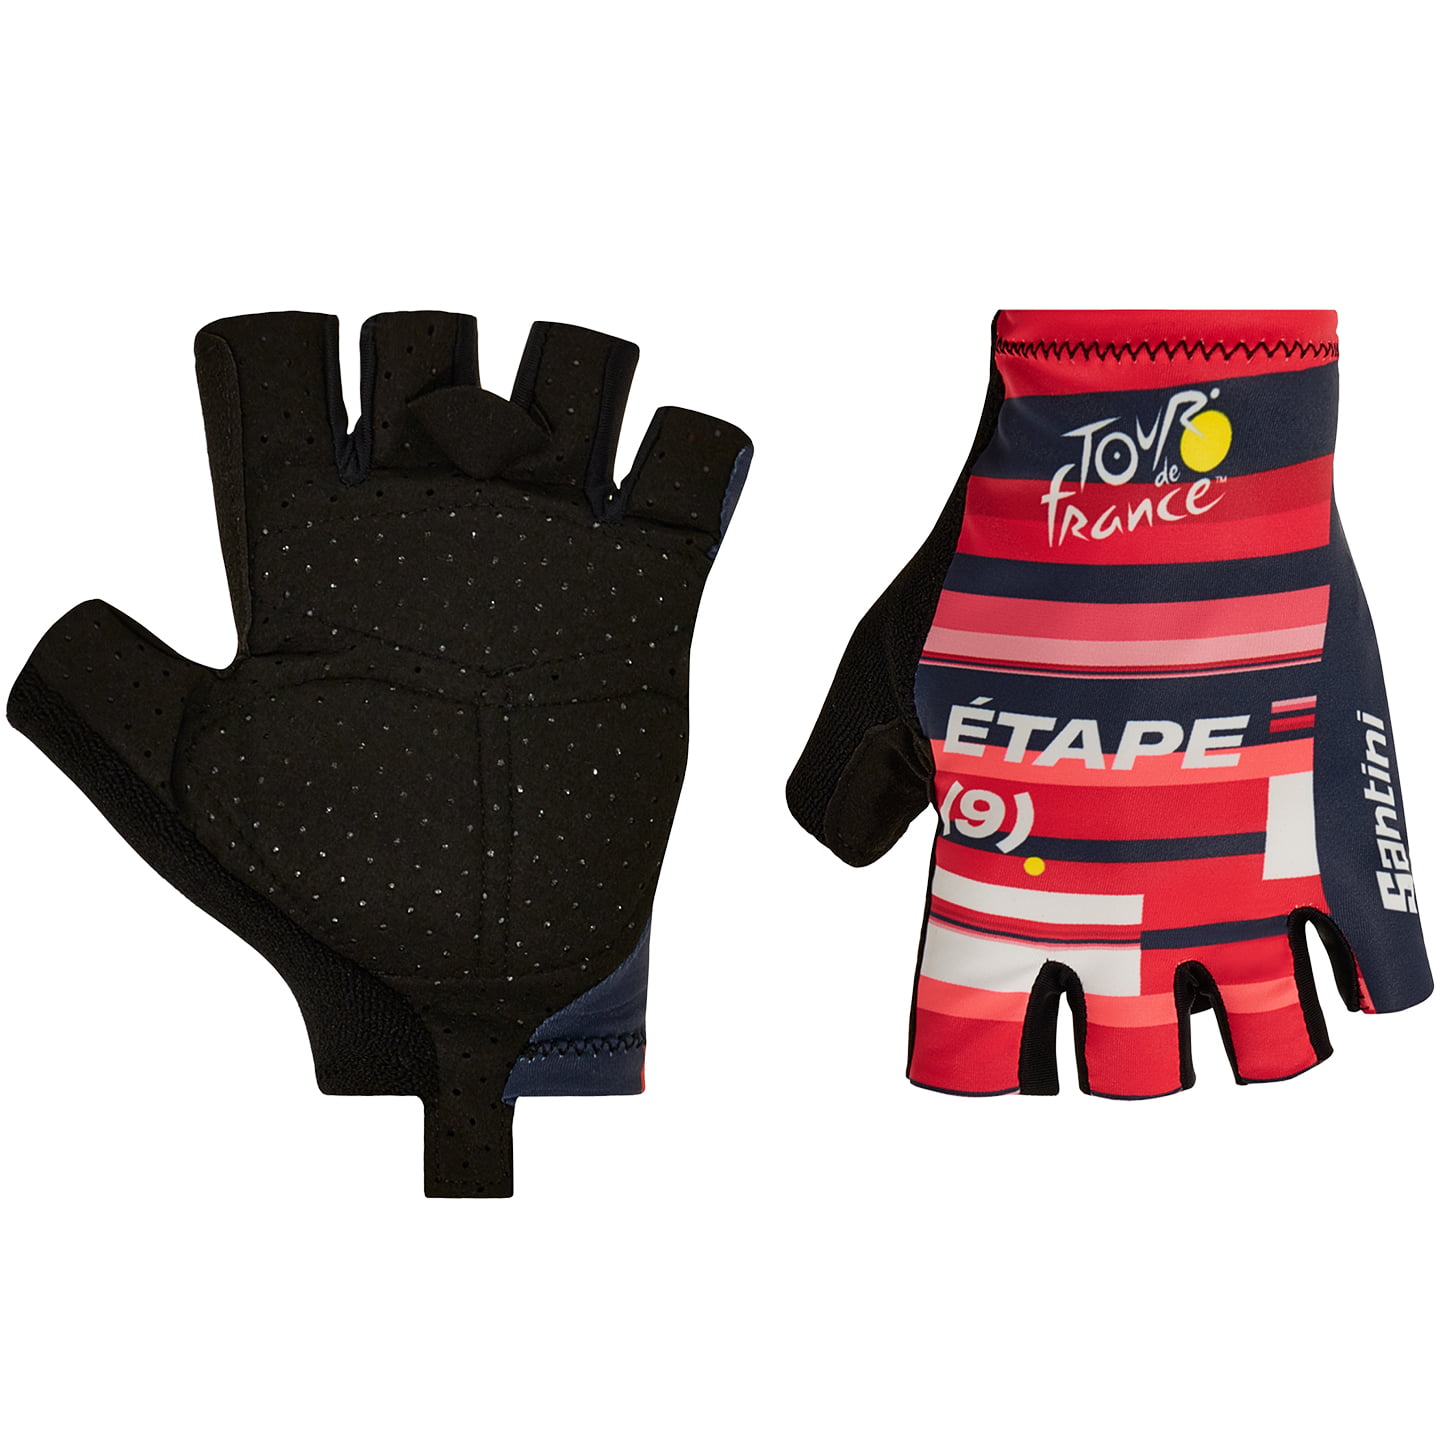 TOUR DE FRANCE Gloves Aigle-Chatel 2022 Cycling Gloves, for men, size M, Cycling gloves, Cycling gear